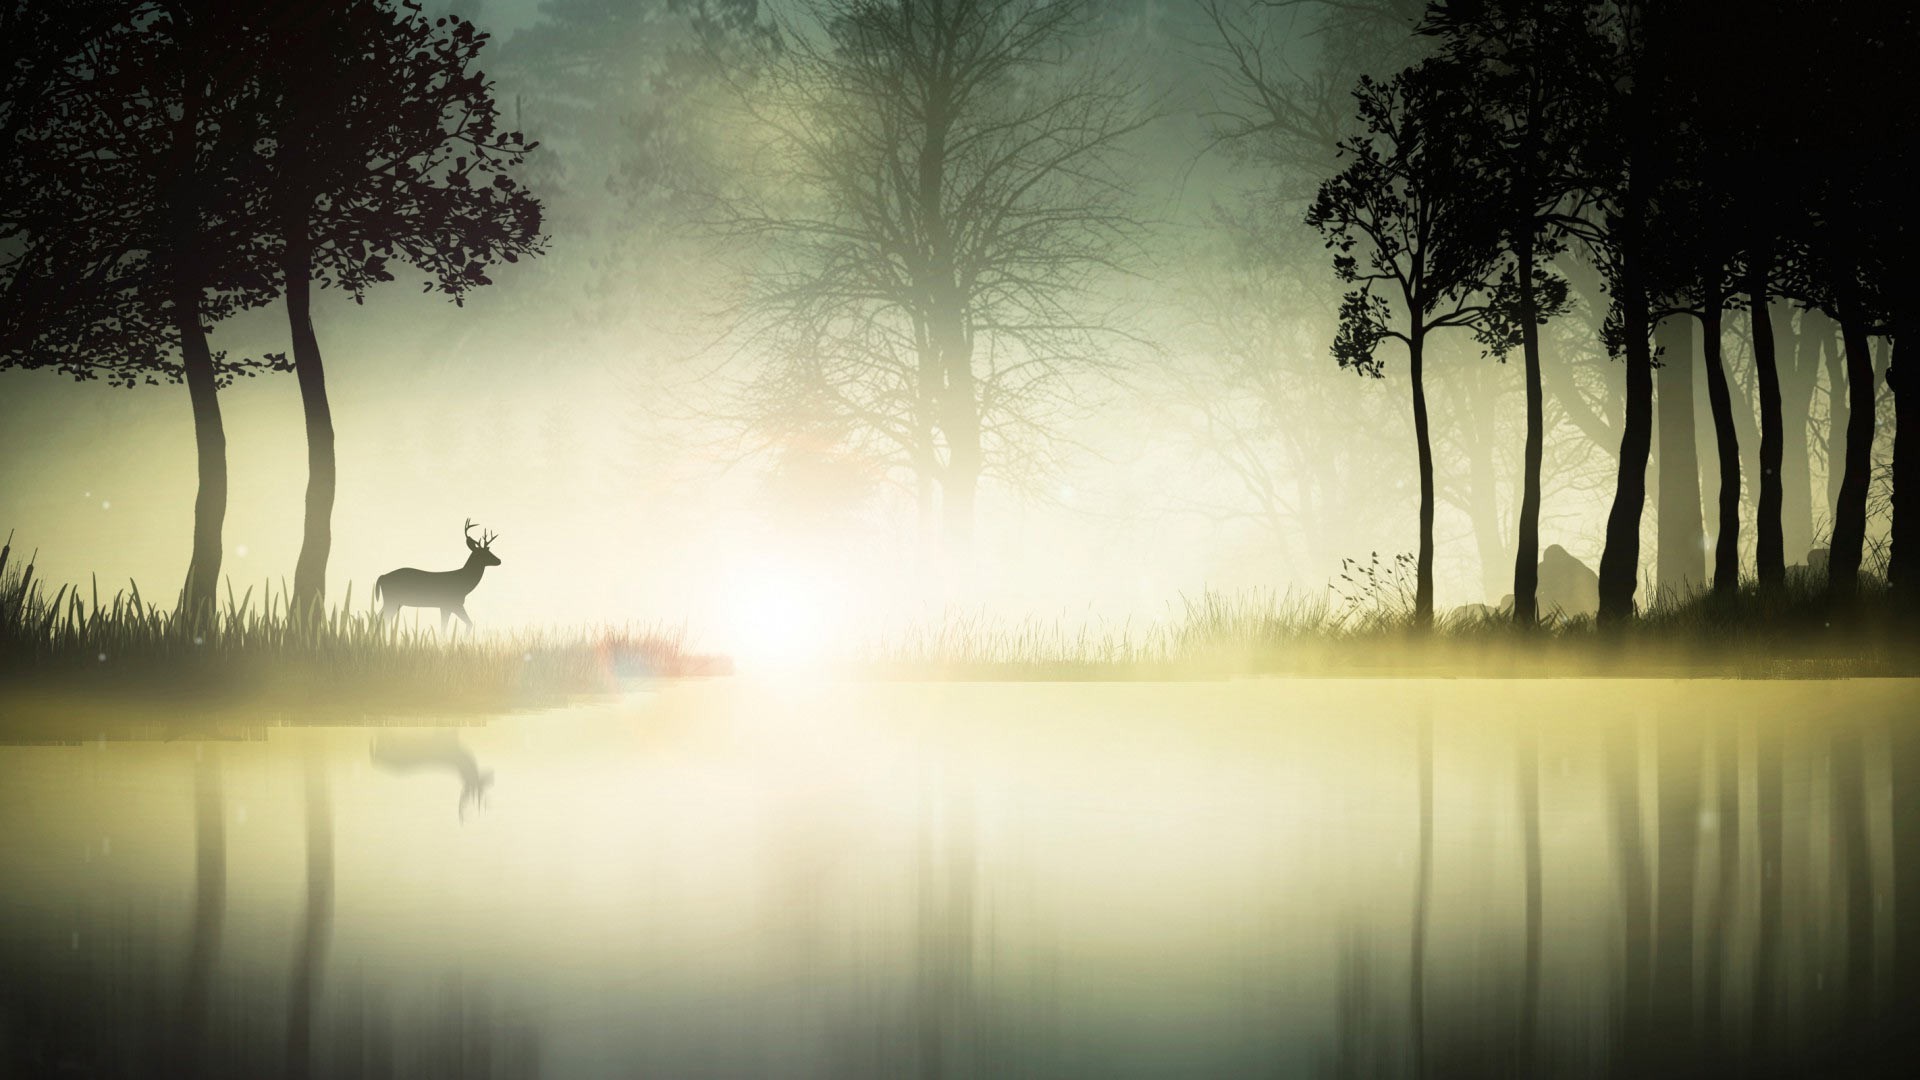 digital Art, Fantasy Art, Animals, Deer, Nature, Landscape, Trees, Water, Mist, Silhouette, Reflection Wallpaper